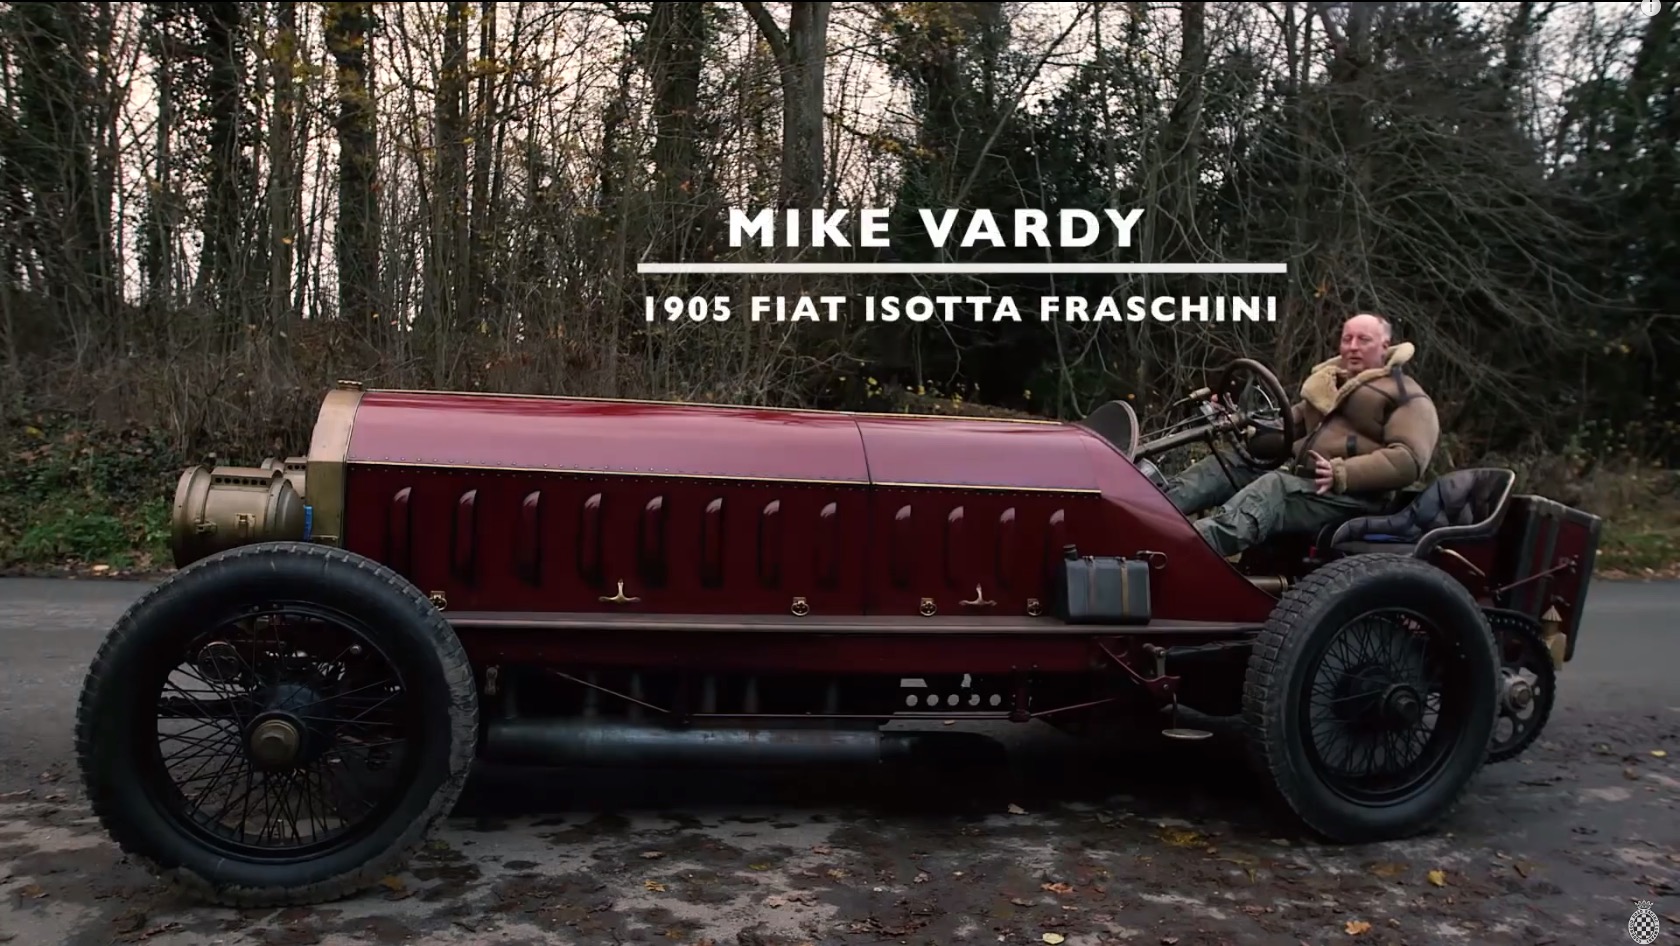 1680x946, 425 Kb / Isotta-Fraschini, Fiat, 1905